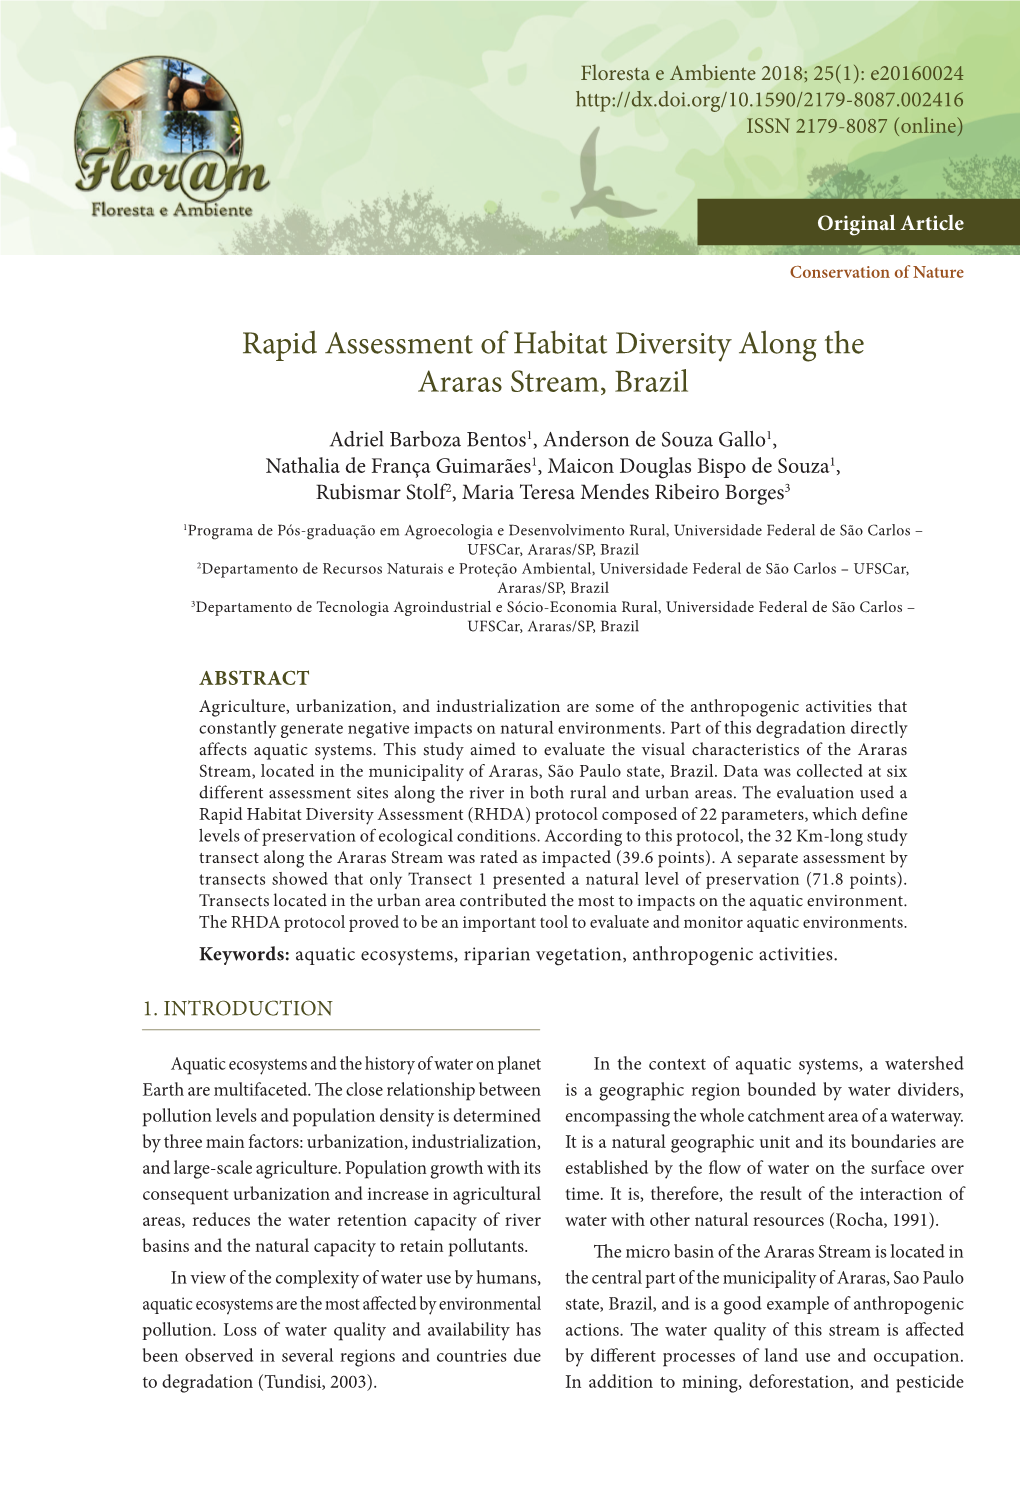 Rapid Assessment of Habitat Diversity Along the Araras Stream, Brazil